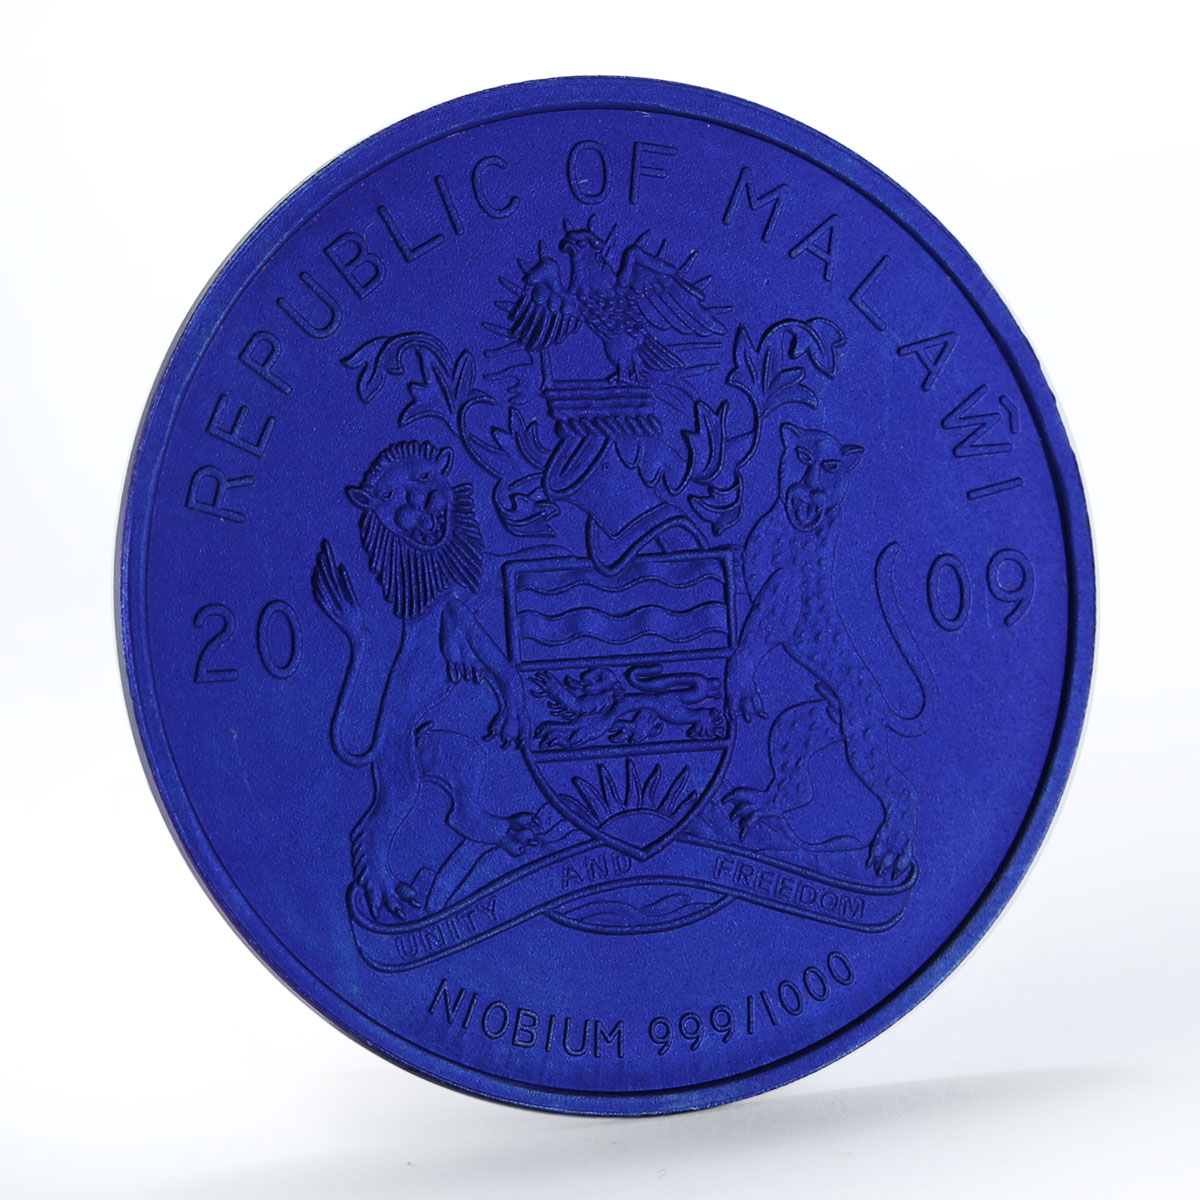 Malawi 50 kwacha International Space Station niobium coin 2009